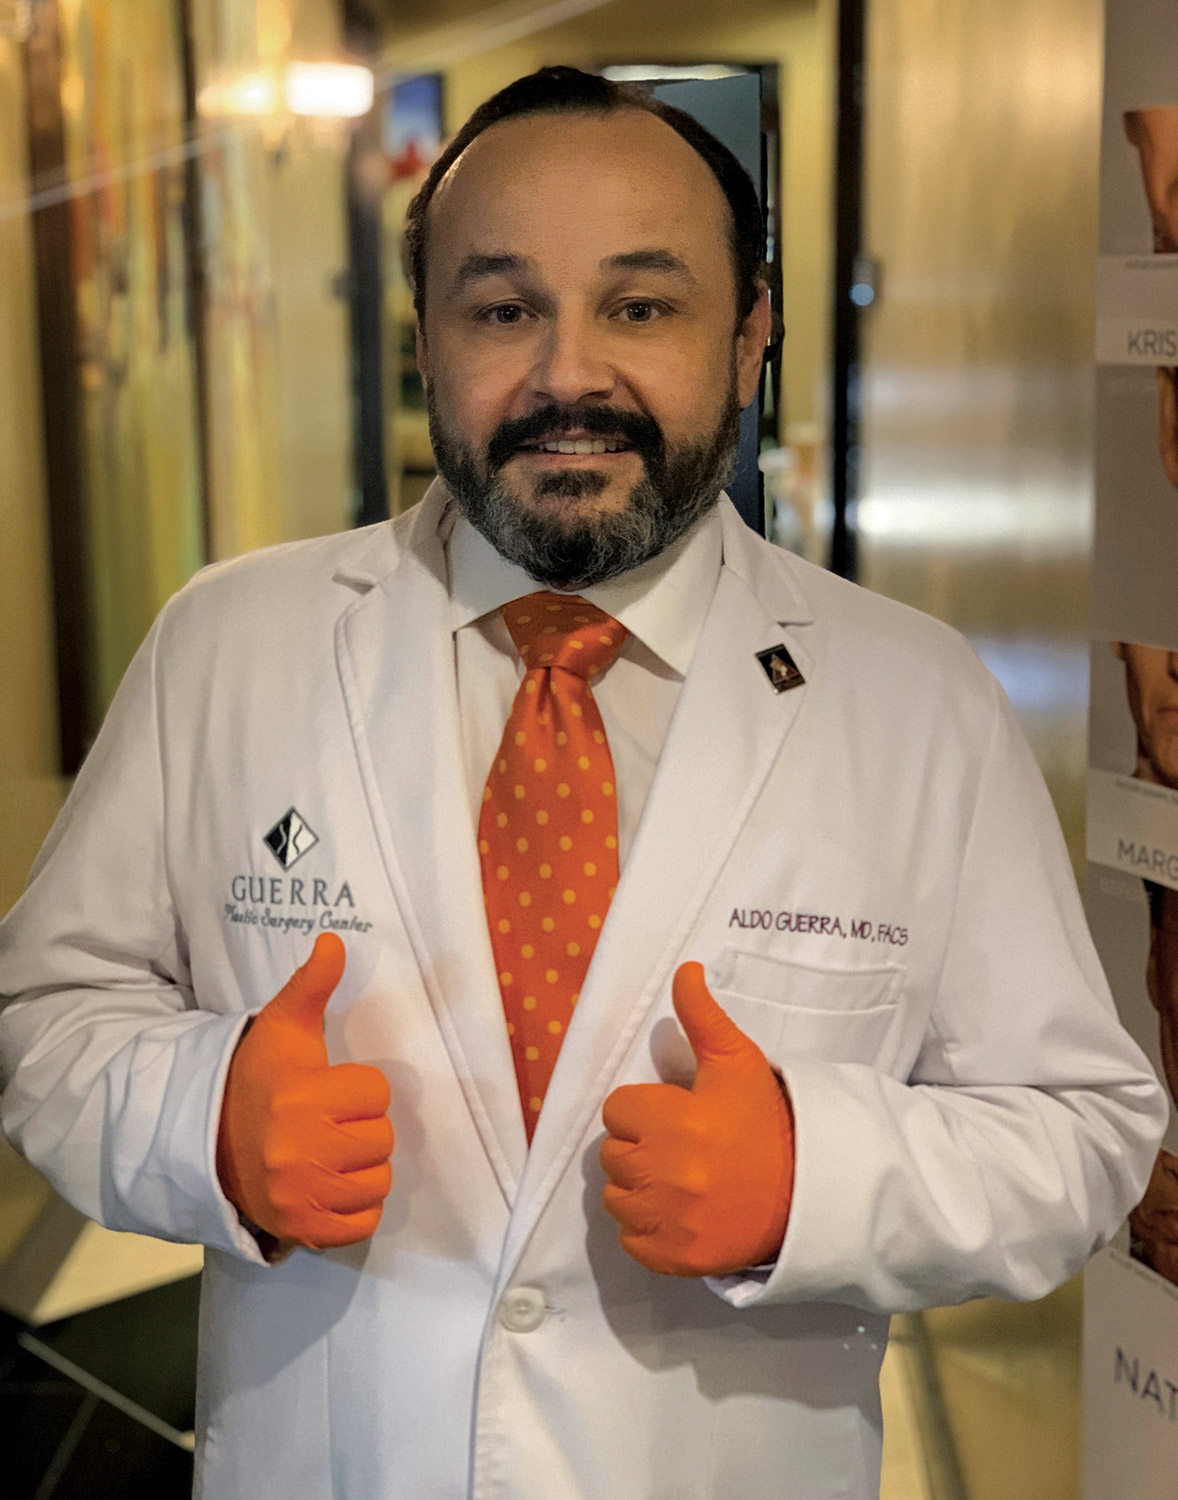 Dr. Aldo with gloves